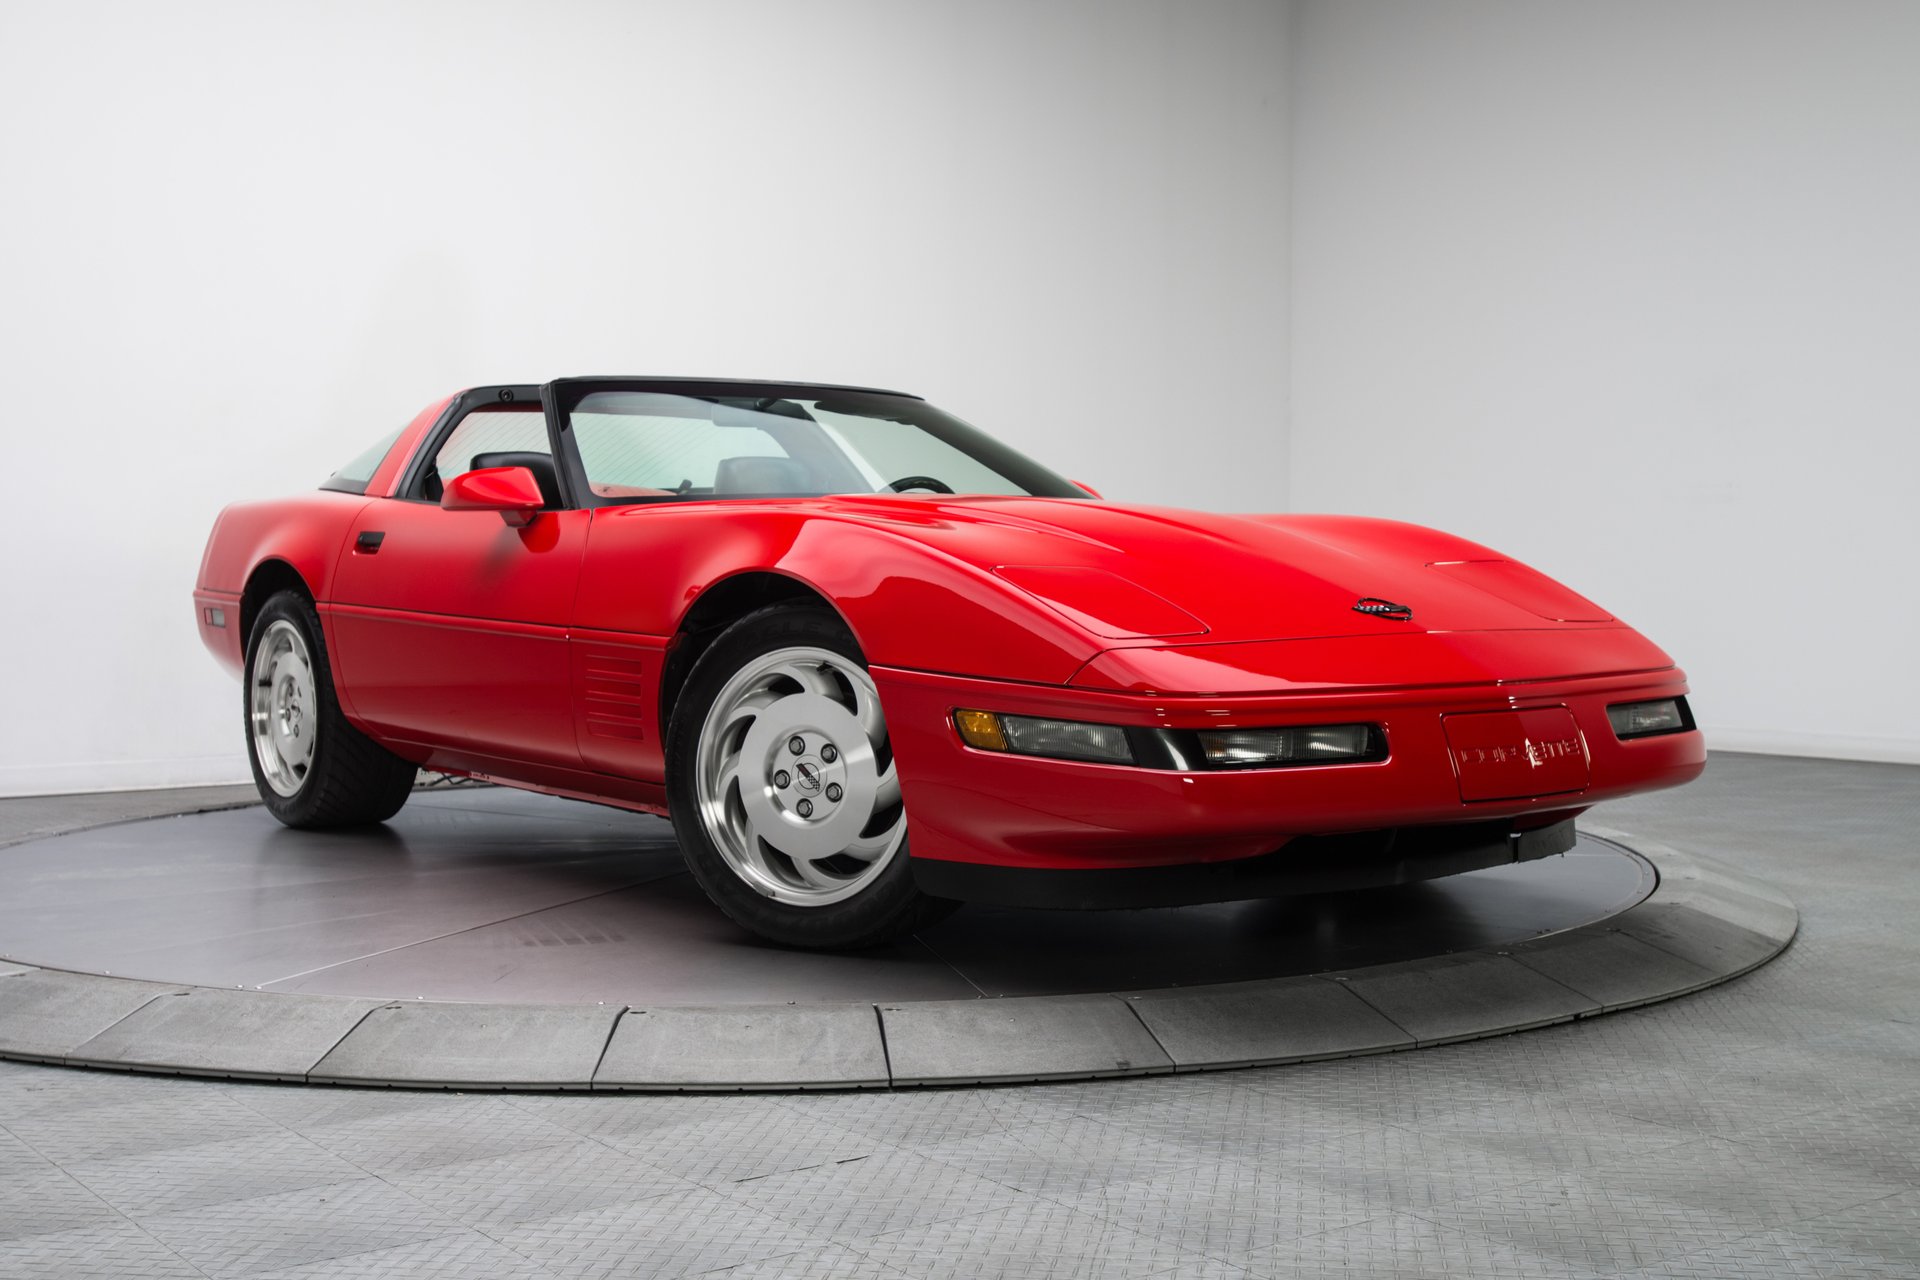 1993 Corvette Performance & Specifications